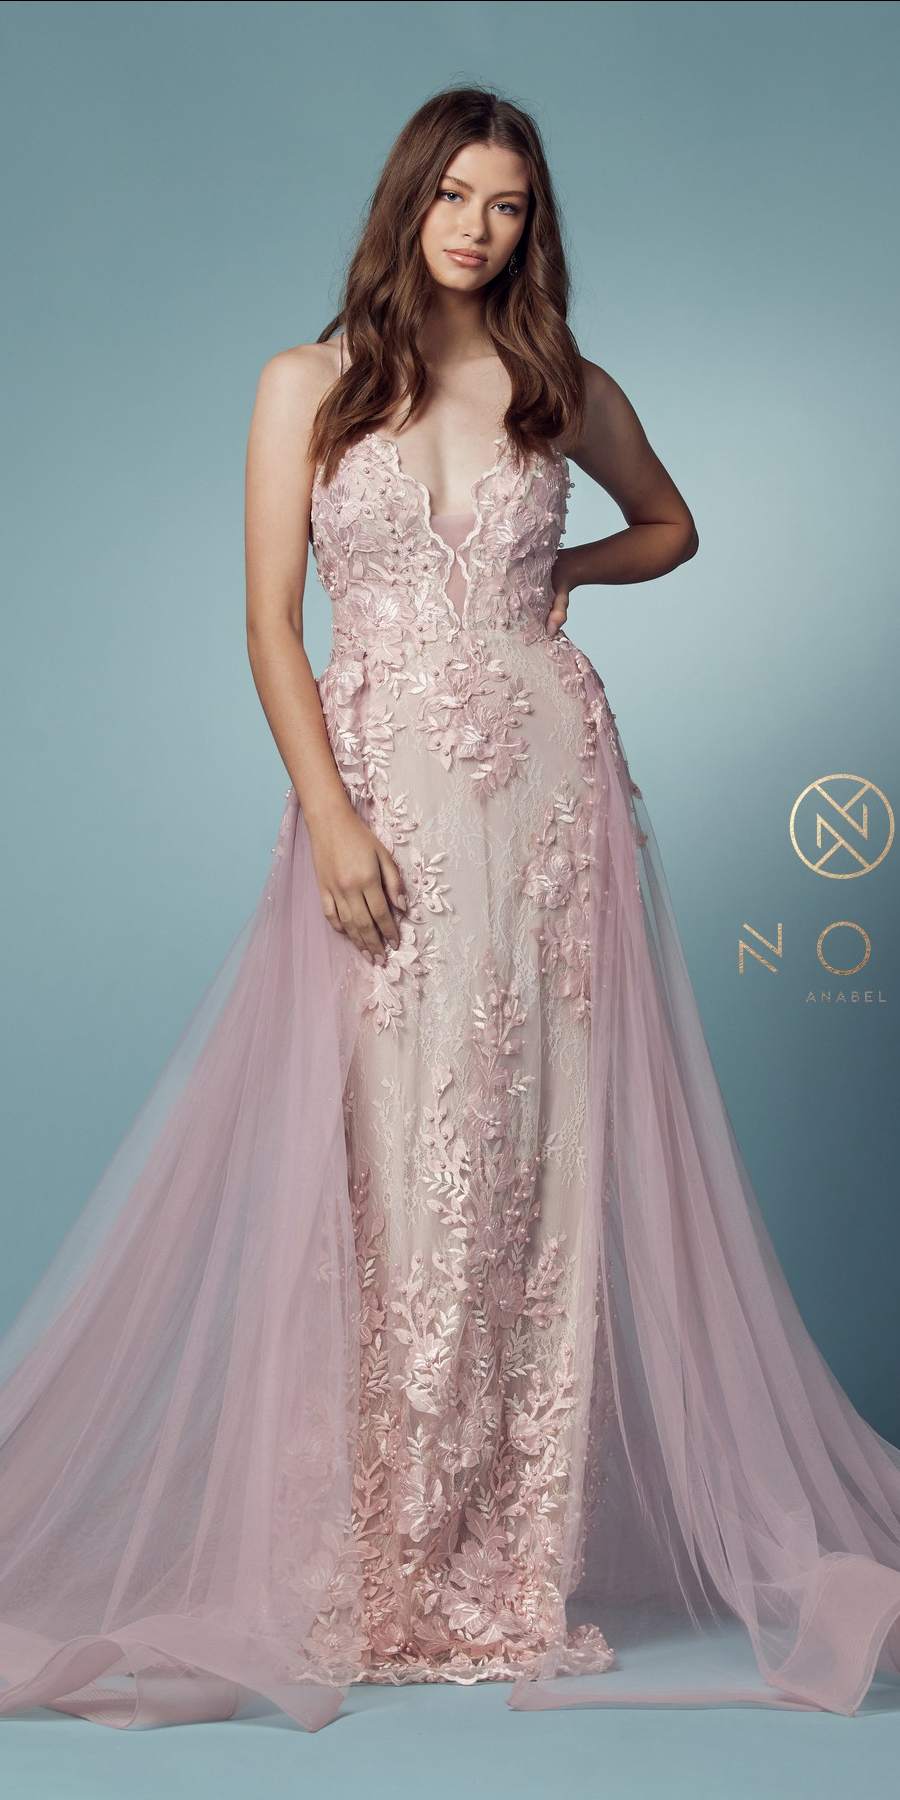 Nox Anabel F485 Dress